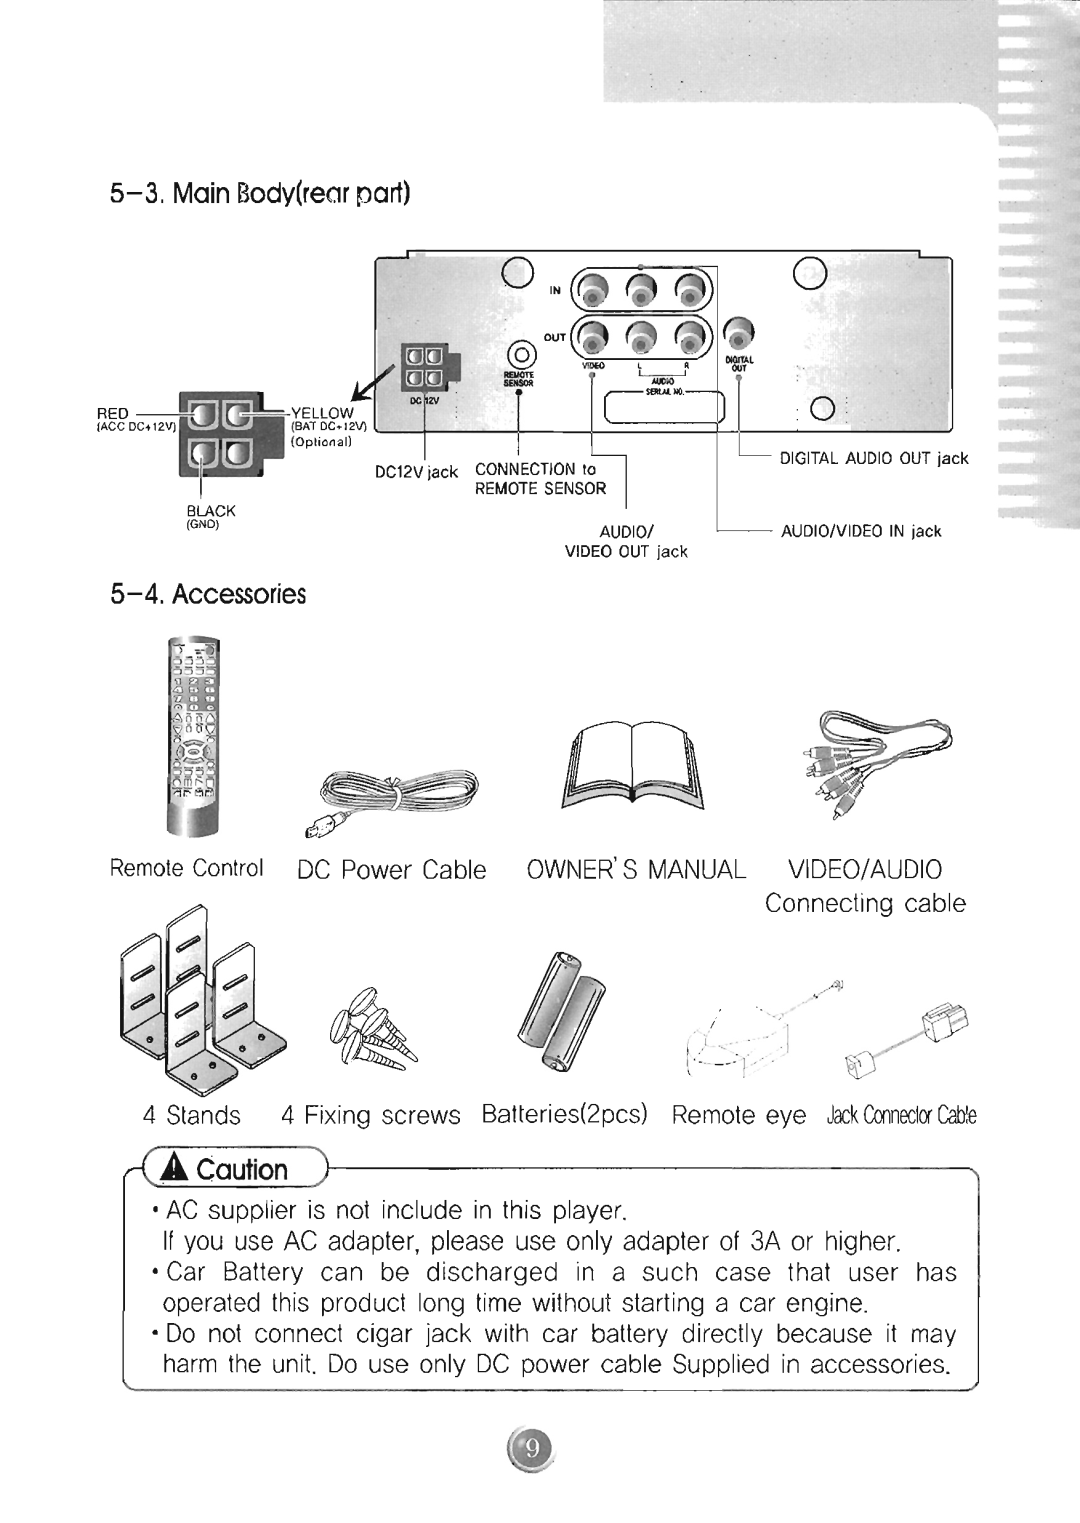 Farenheit Technologies DVD-16TM manual 